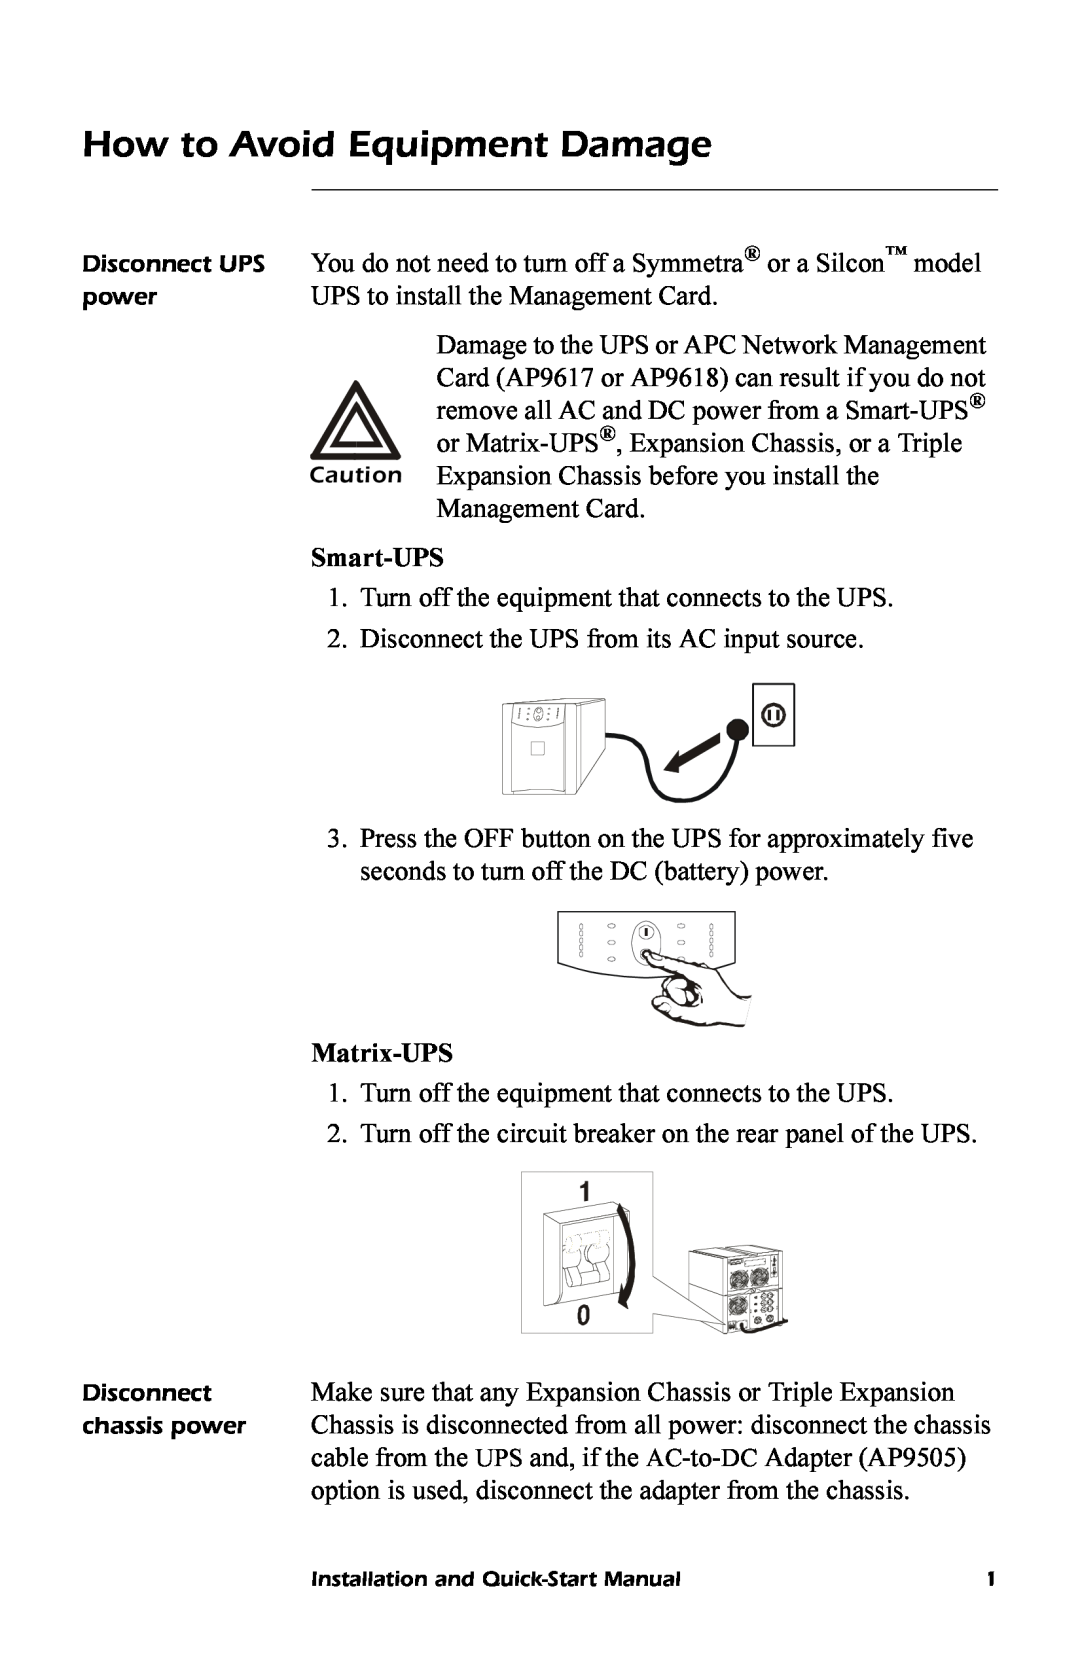 APC AP9618, AP9619 quick start manual How to Avoid Equipment Damage, Smart-UPS, Matrix-UPS 